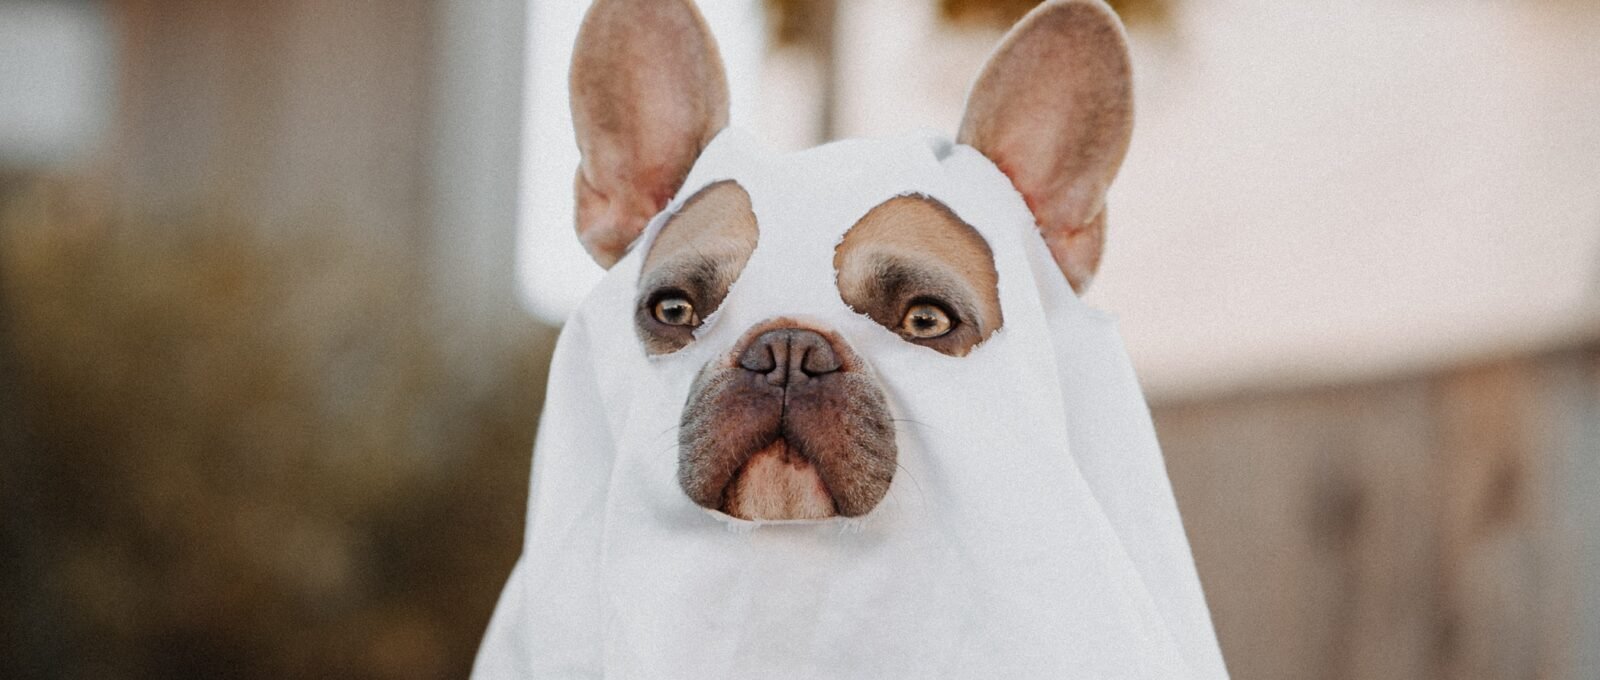 Dog in sheet - Halloween costume